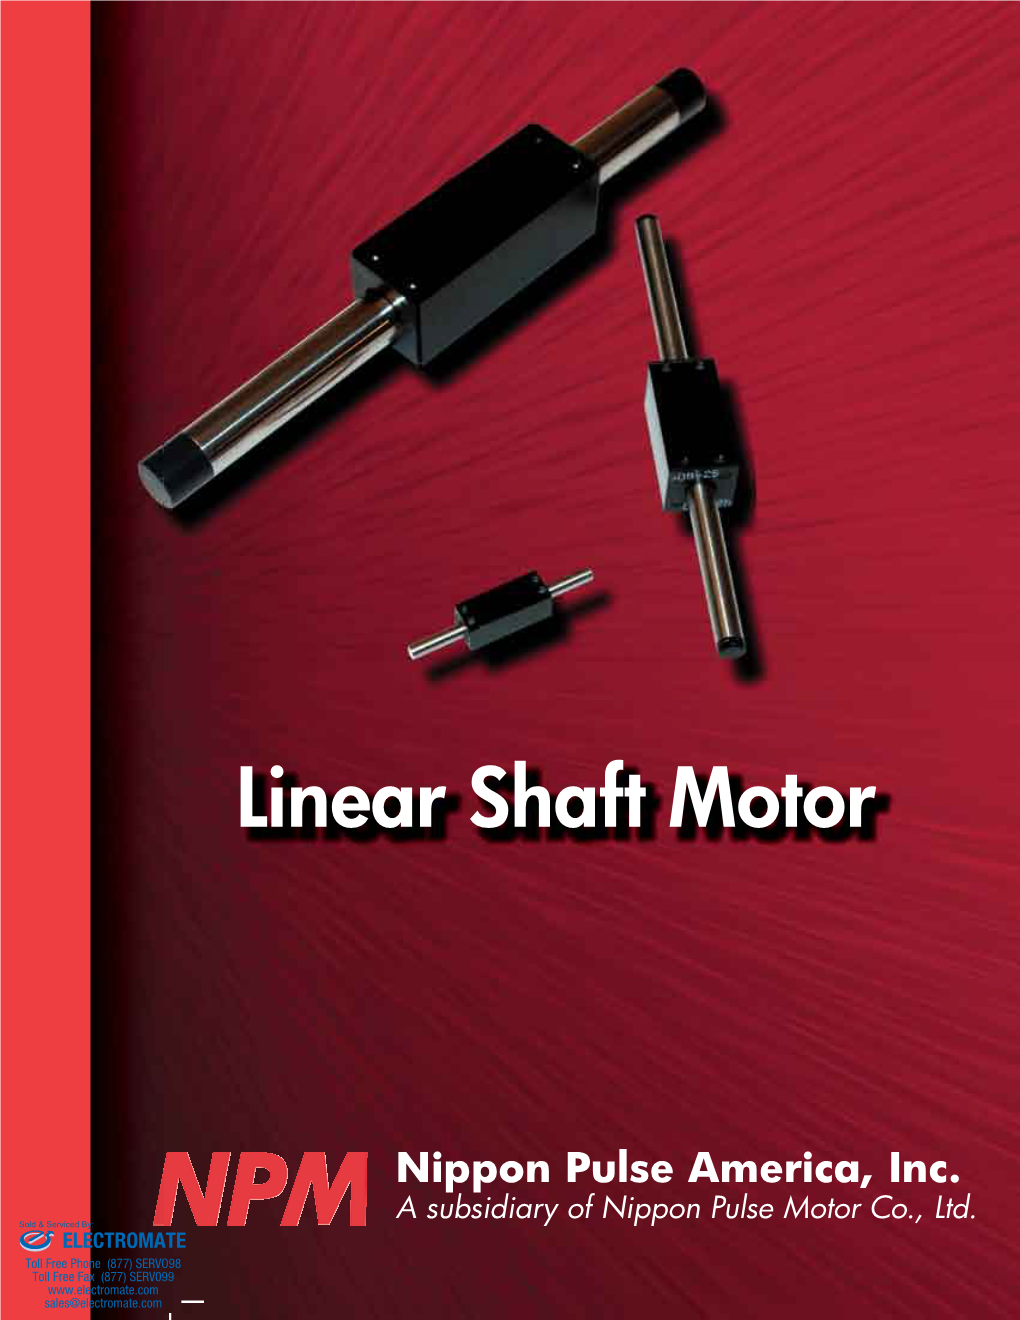 Linear Shaft Motor